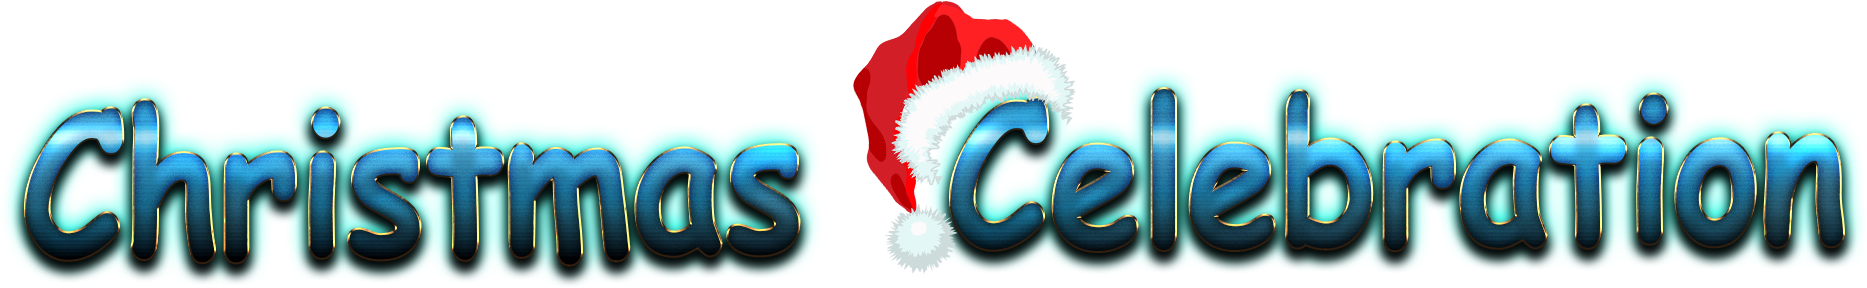 Festive Christmas Celebration Text PNG image